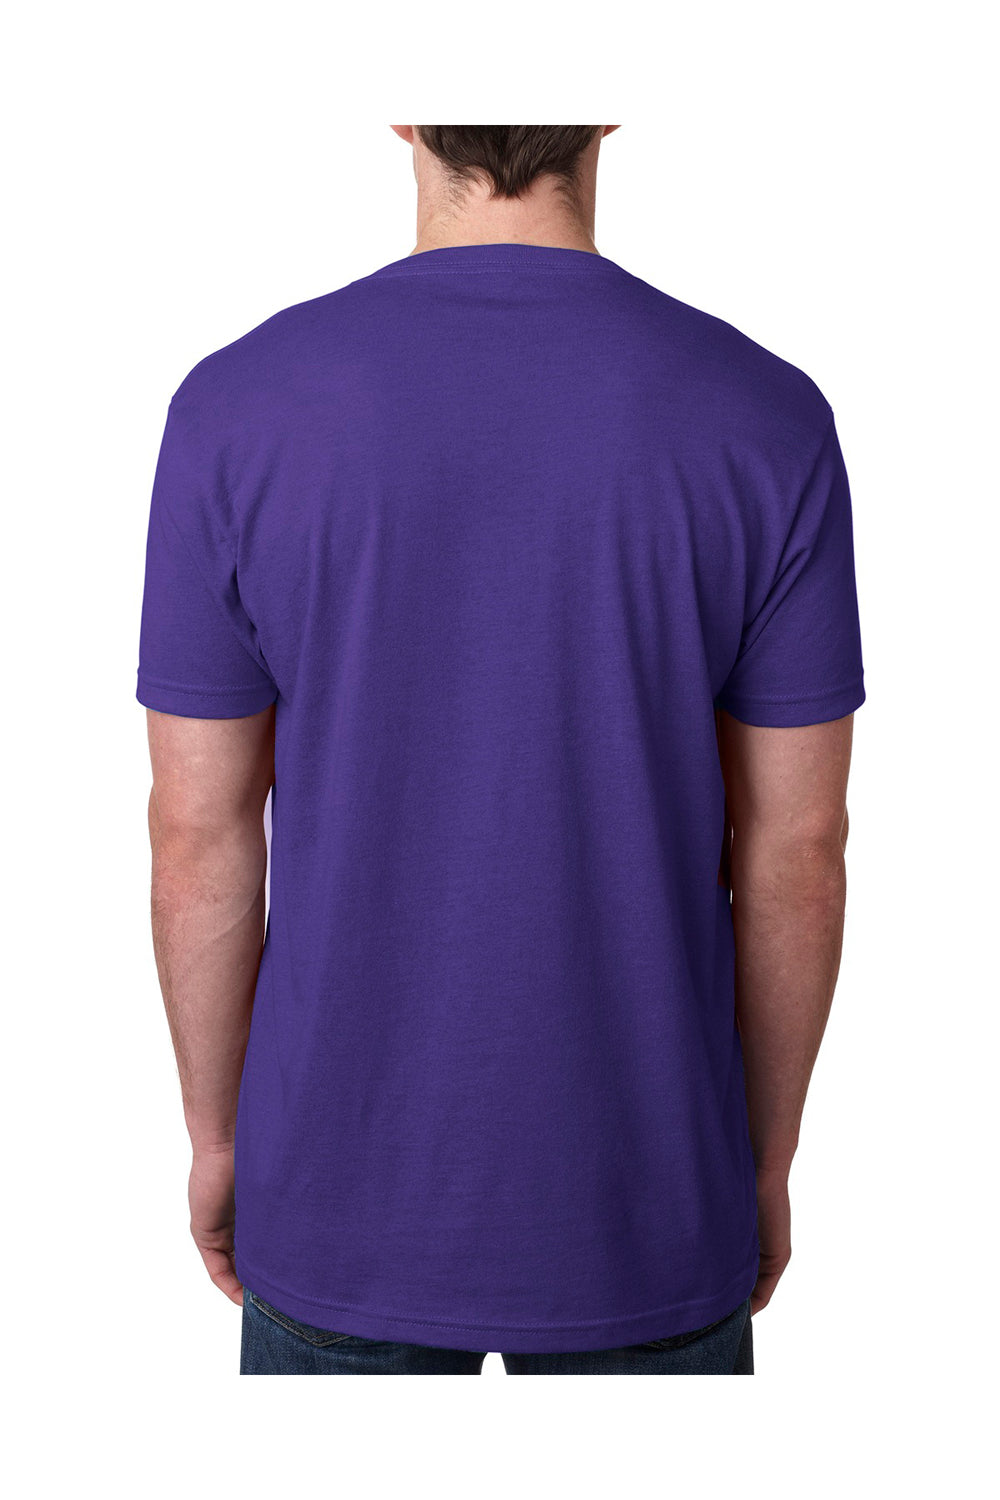 Next Level 6240 Mens CVC Jersey Short Sleeve V-Neck T-Shirt Purple Rush Back